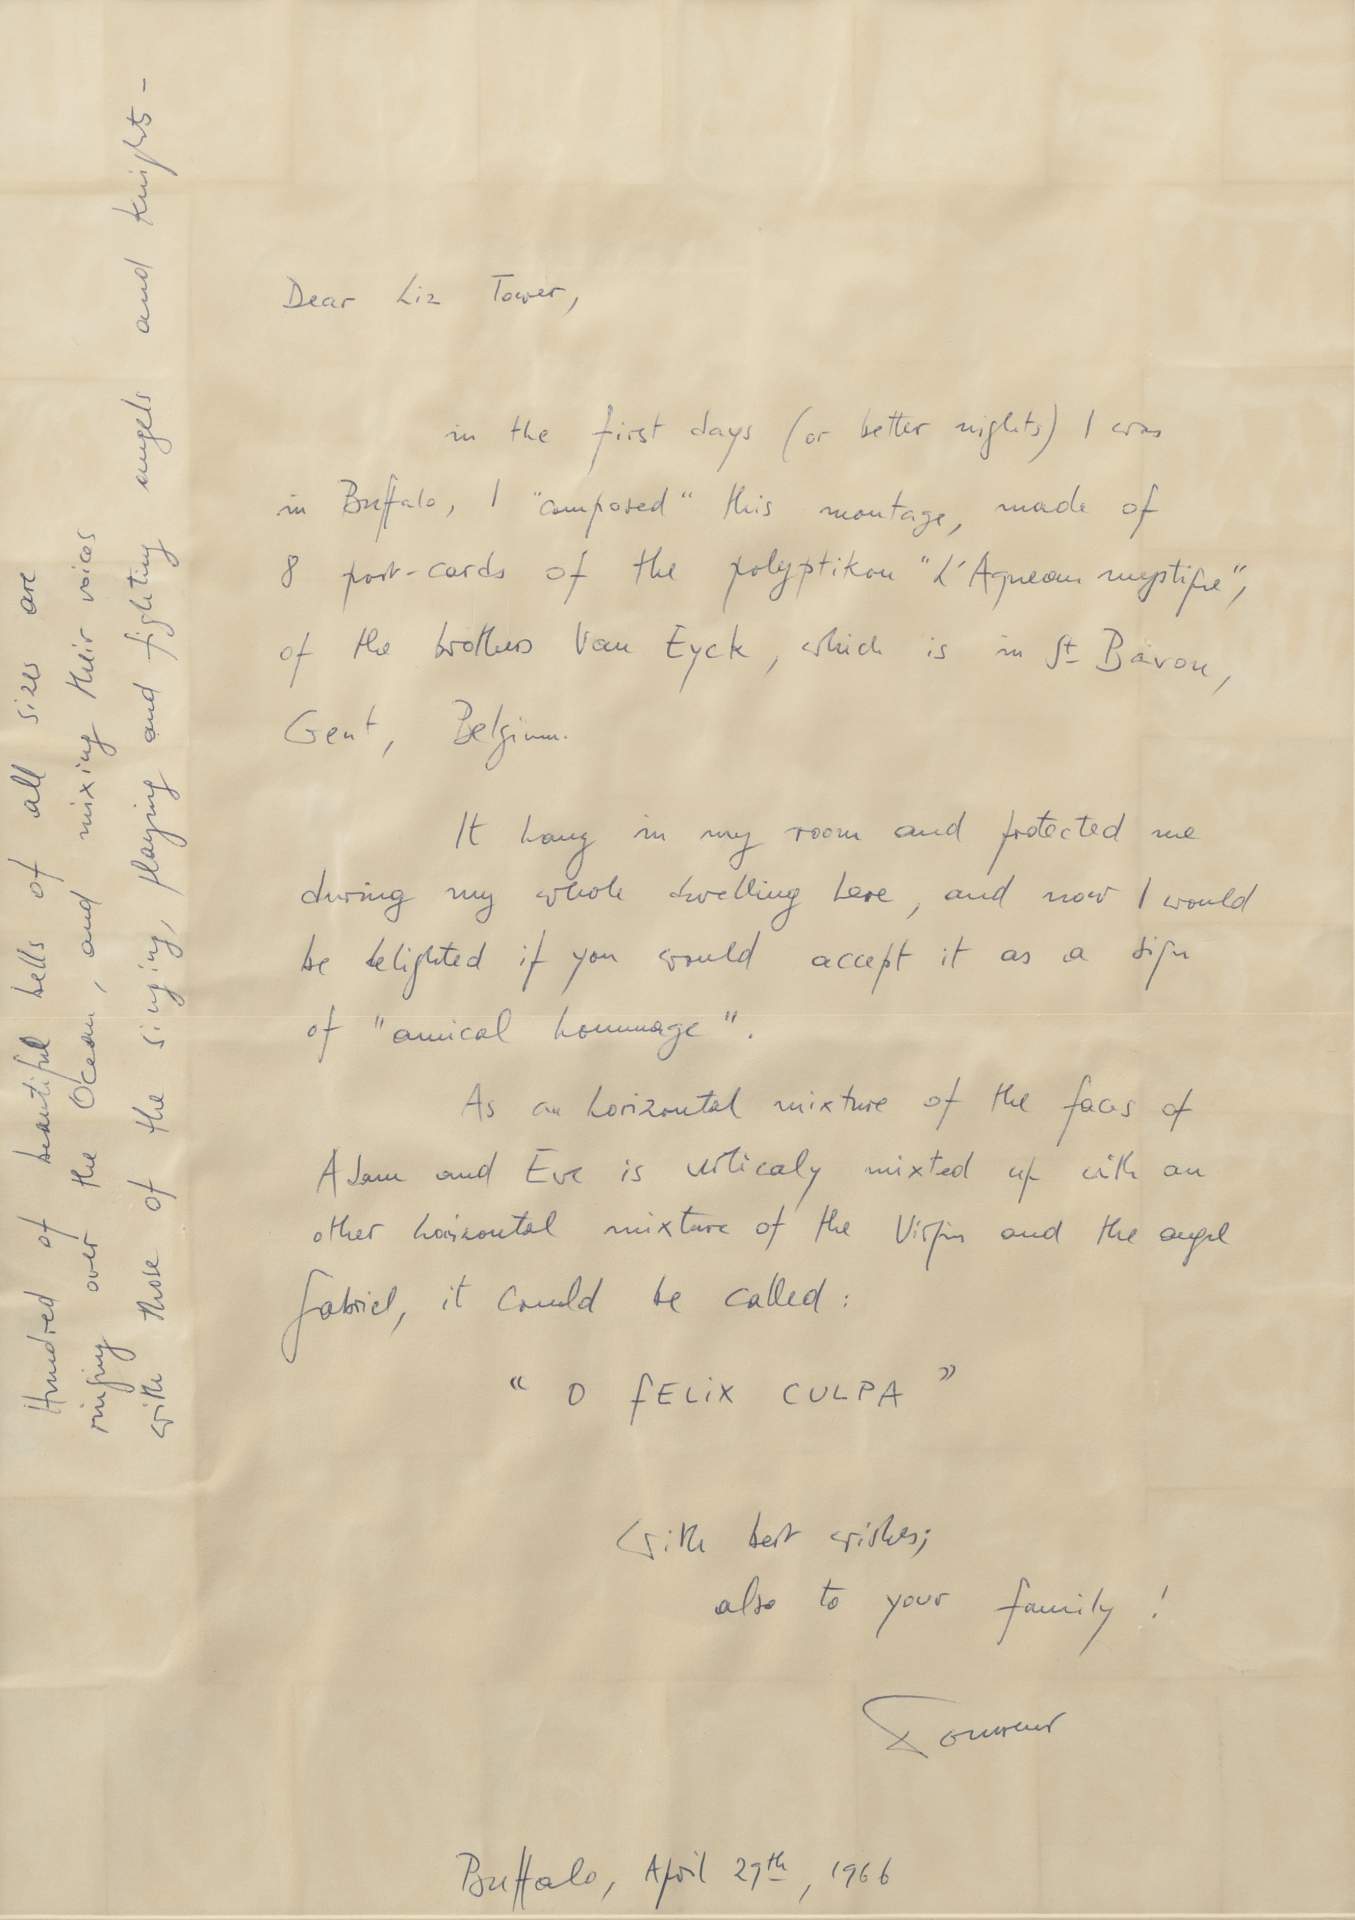 Letter to Liz Tower (back of "O Felix Culpa")